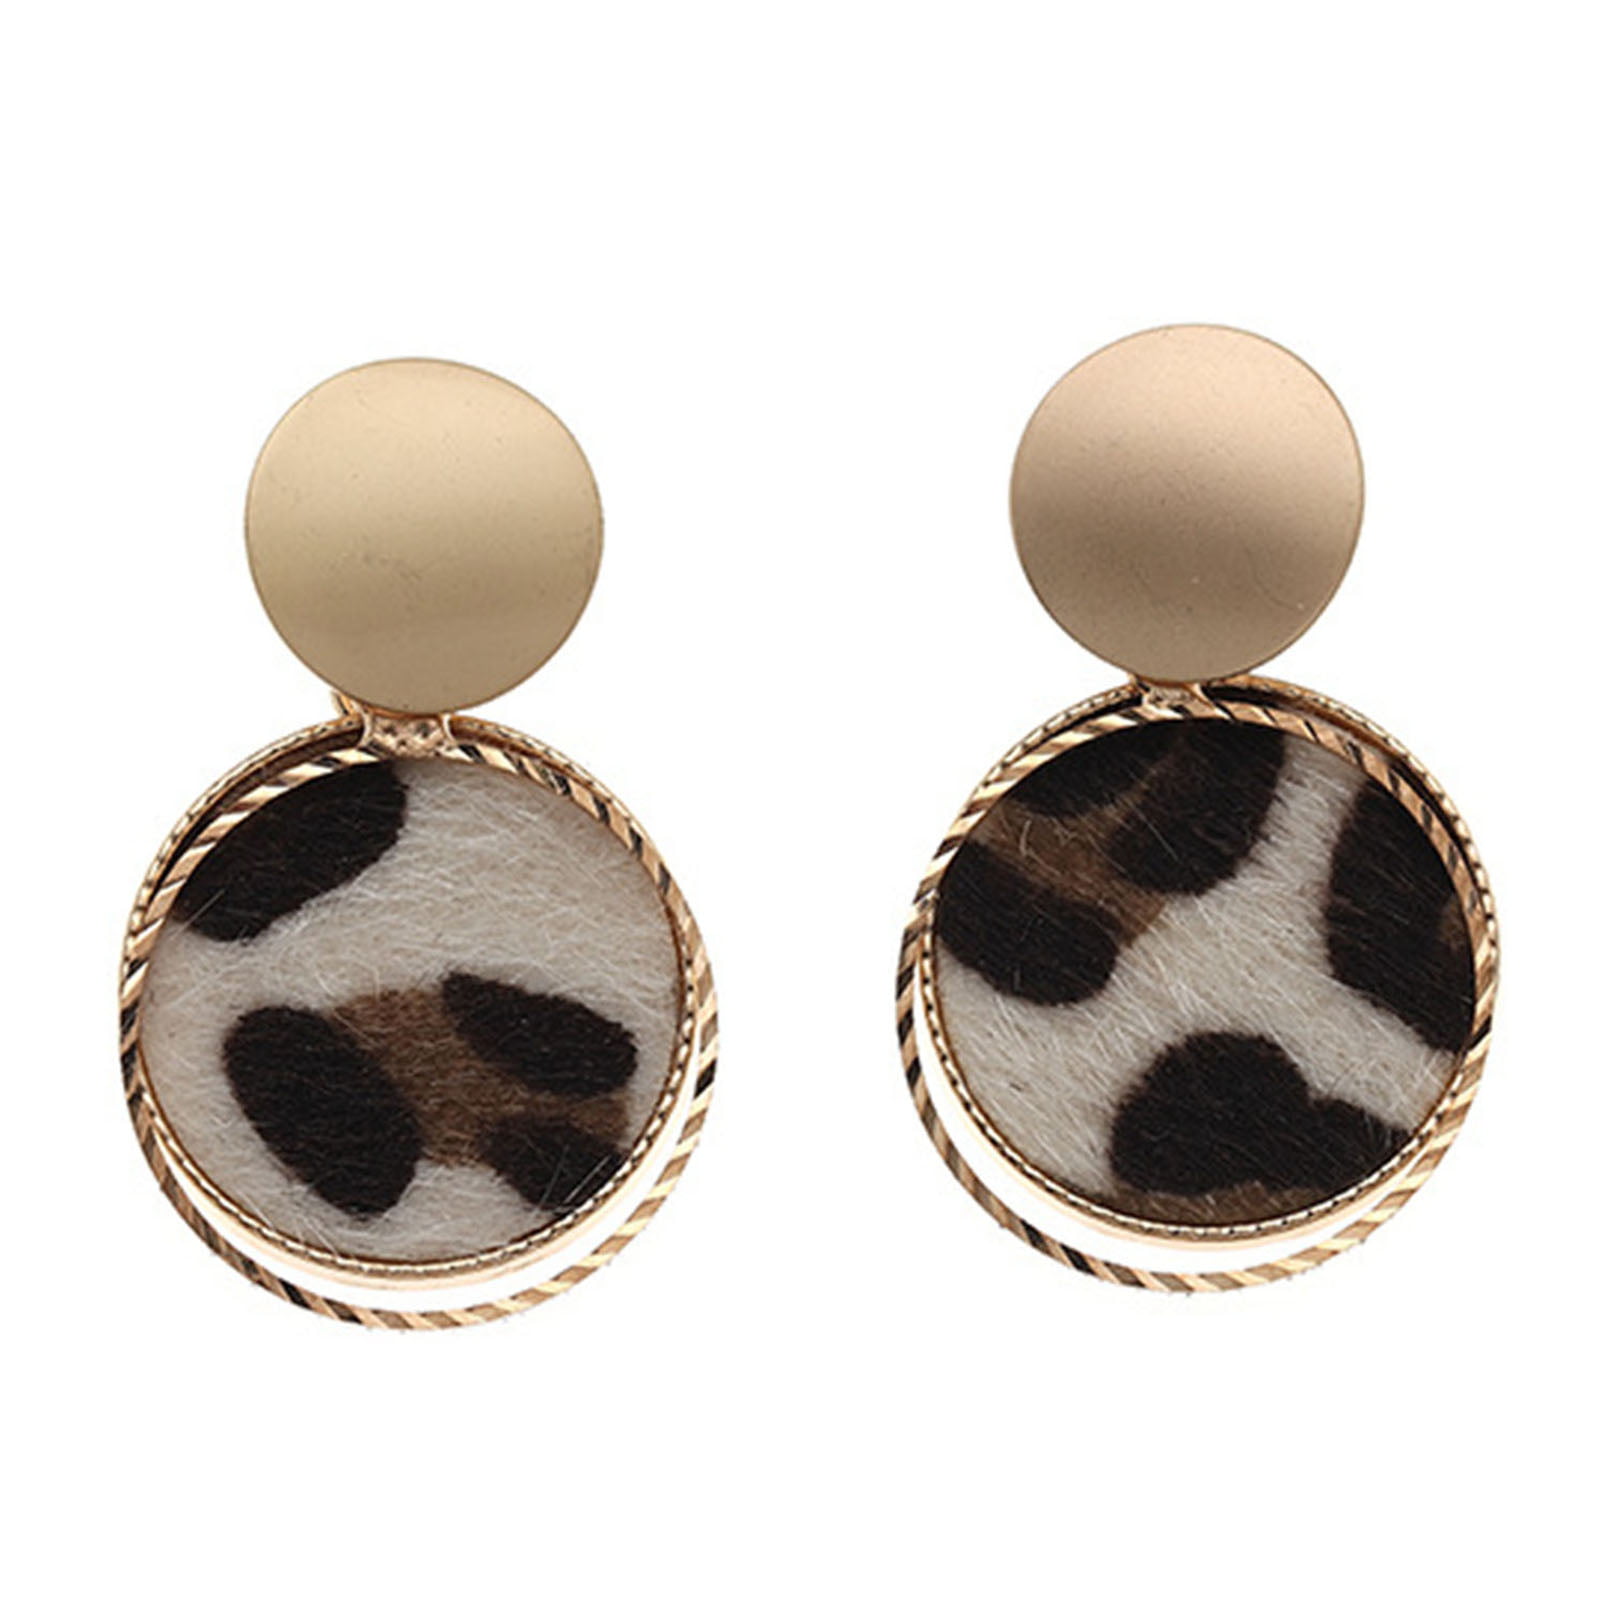 1 Pair Simple Fashion Women Earrings Geometric Round Circle Ear Stud Jewelry New 